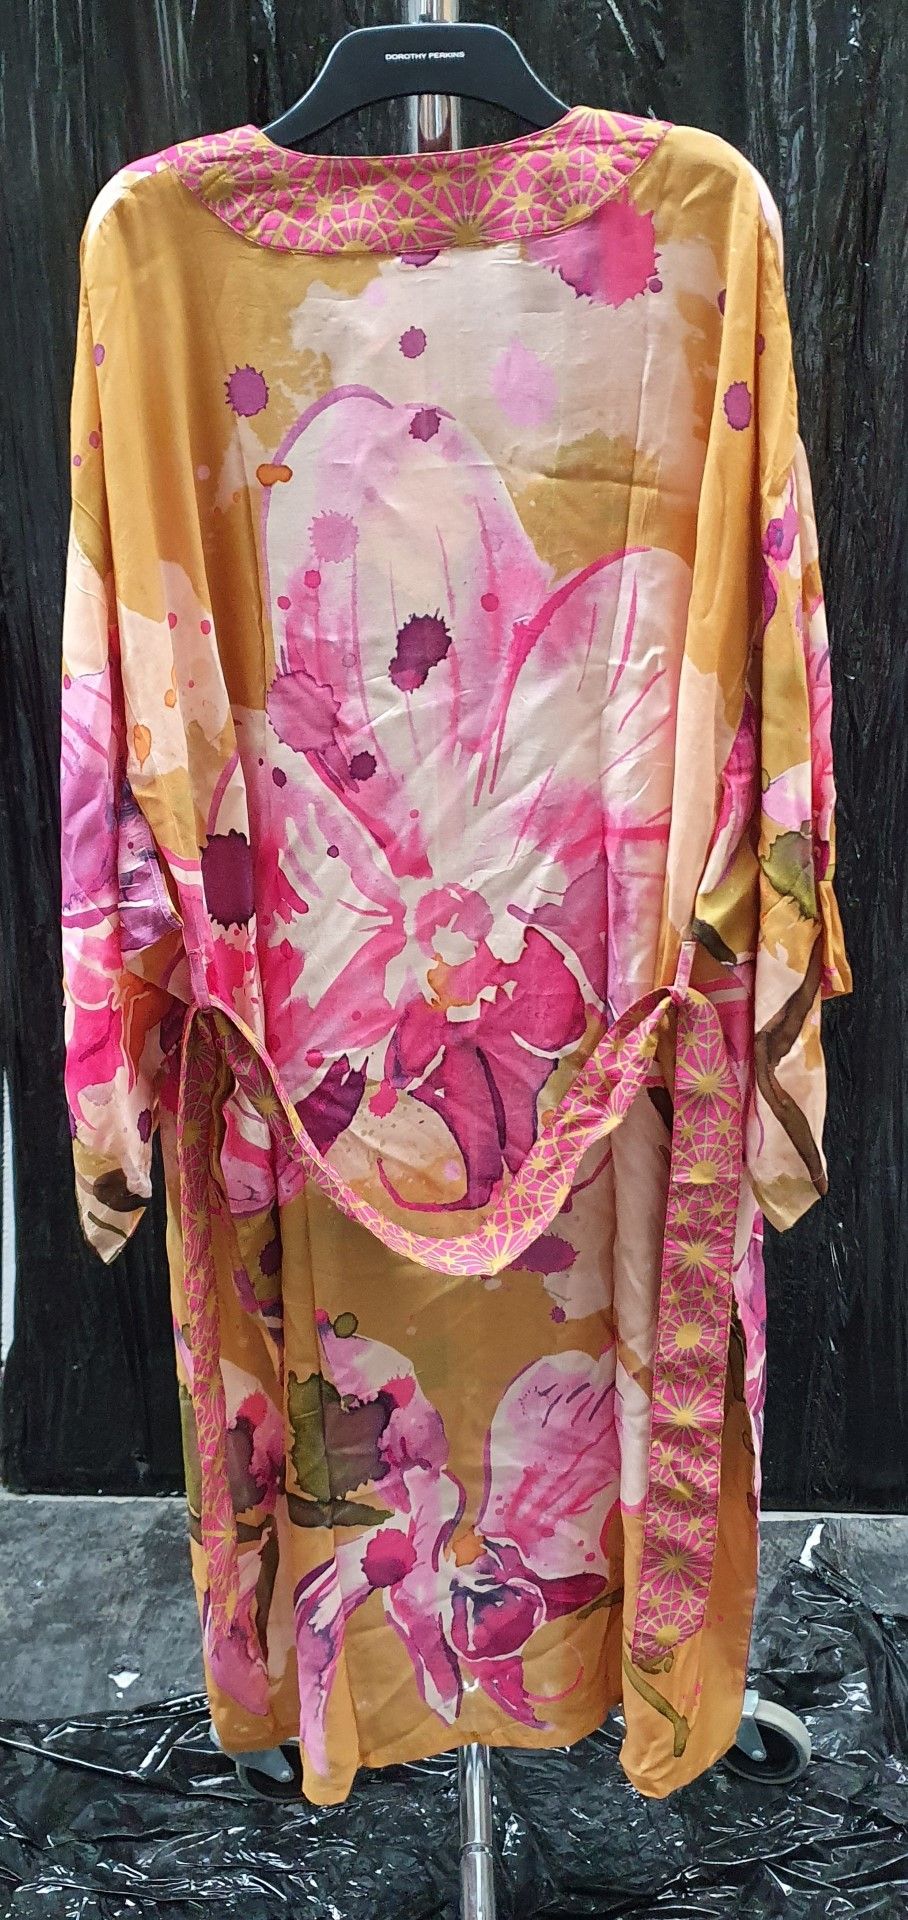 4 x Powder Kimono Style Gowns- Folk Art Petal Finish 100% Viscose Fabric - Adult One Size - New - Image 11 of 11